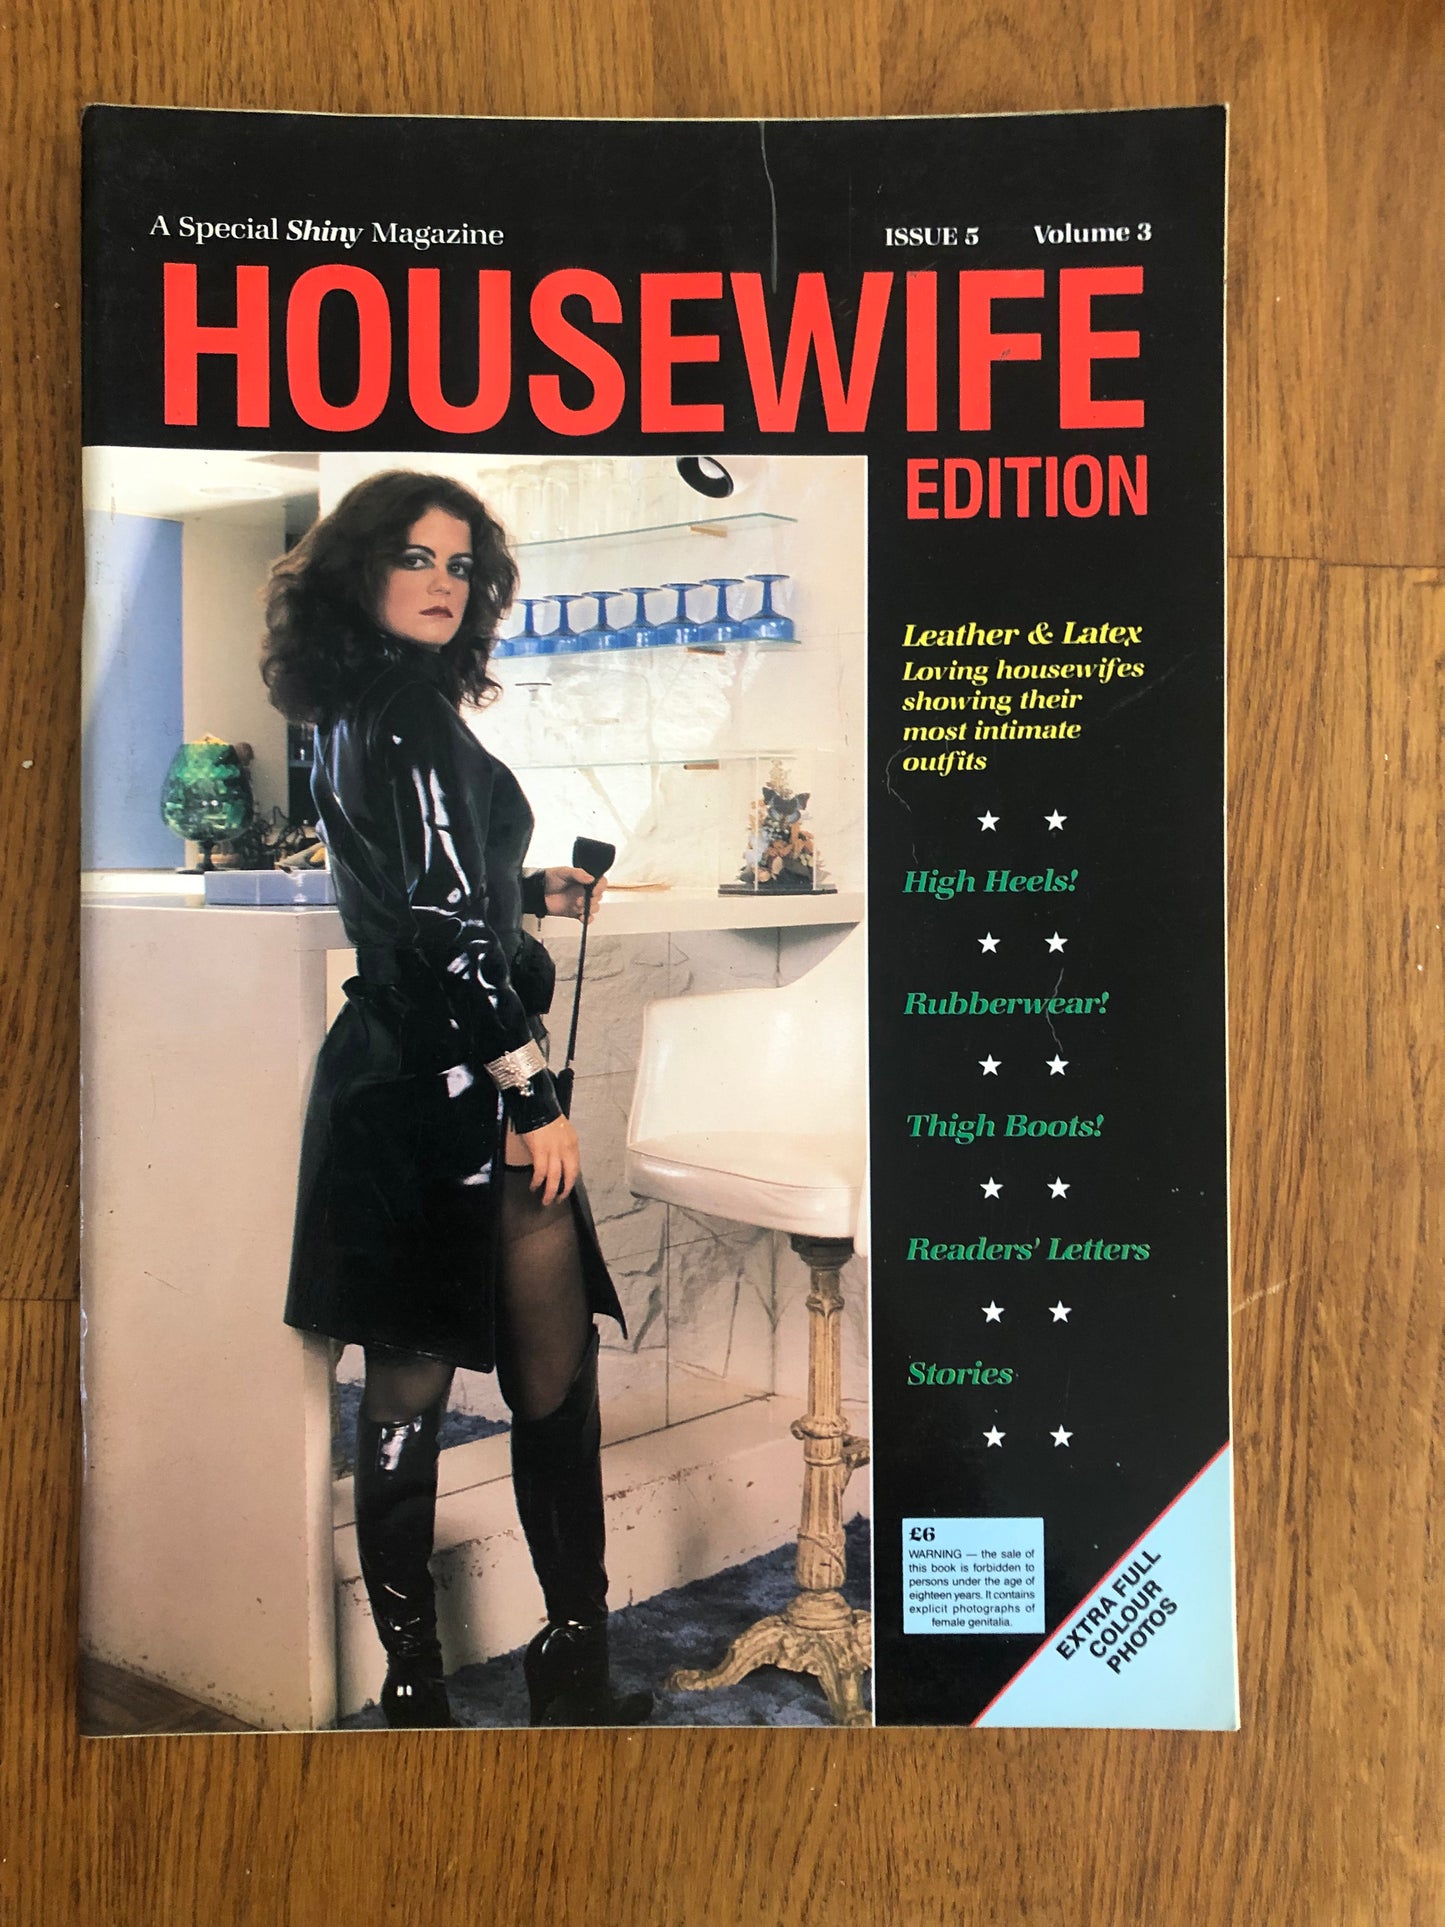 Shiny international Housewife Edition Vol 3 No 5